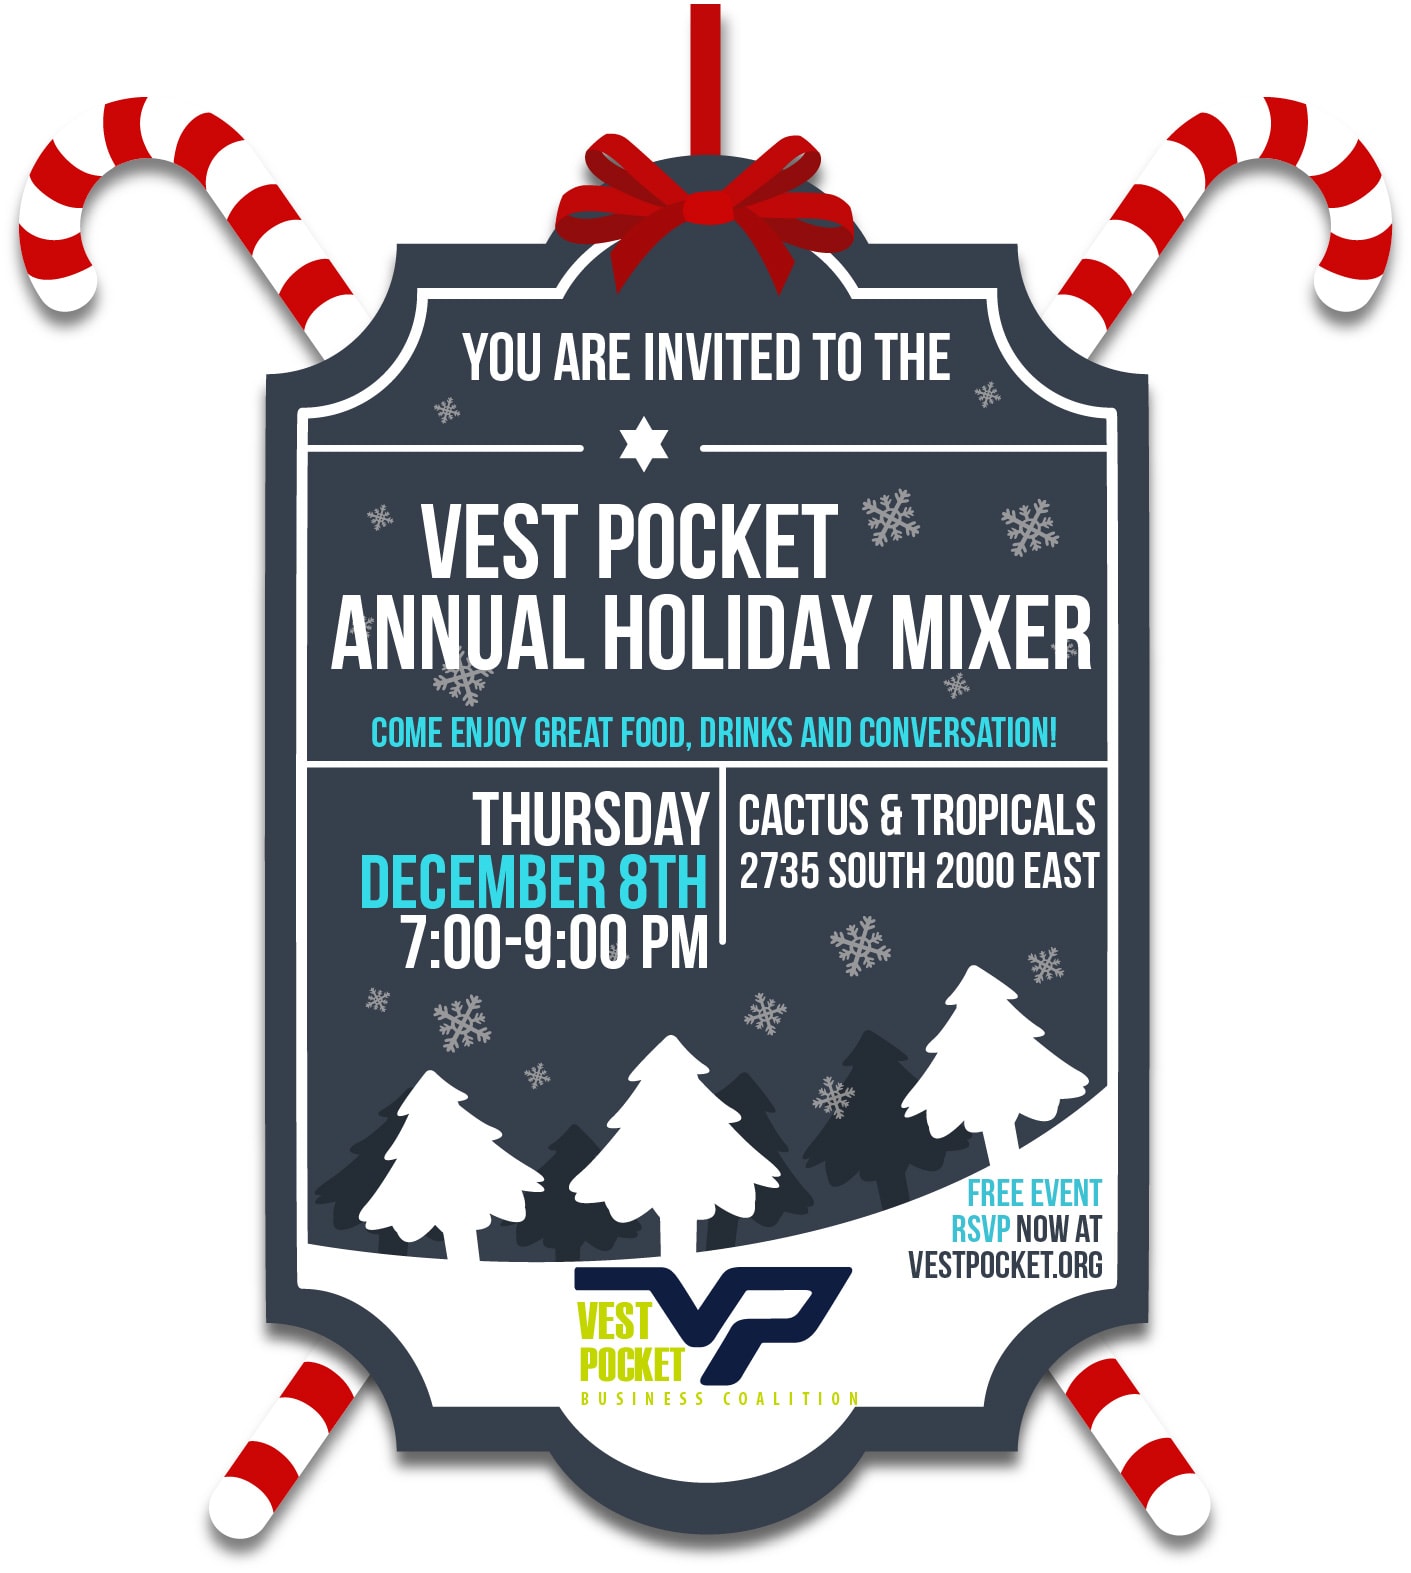 Vest Pocket Annual Holiday Mixer